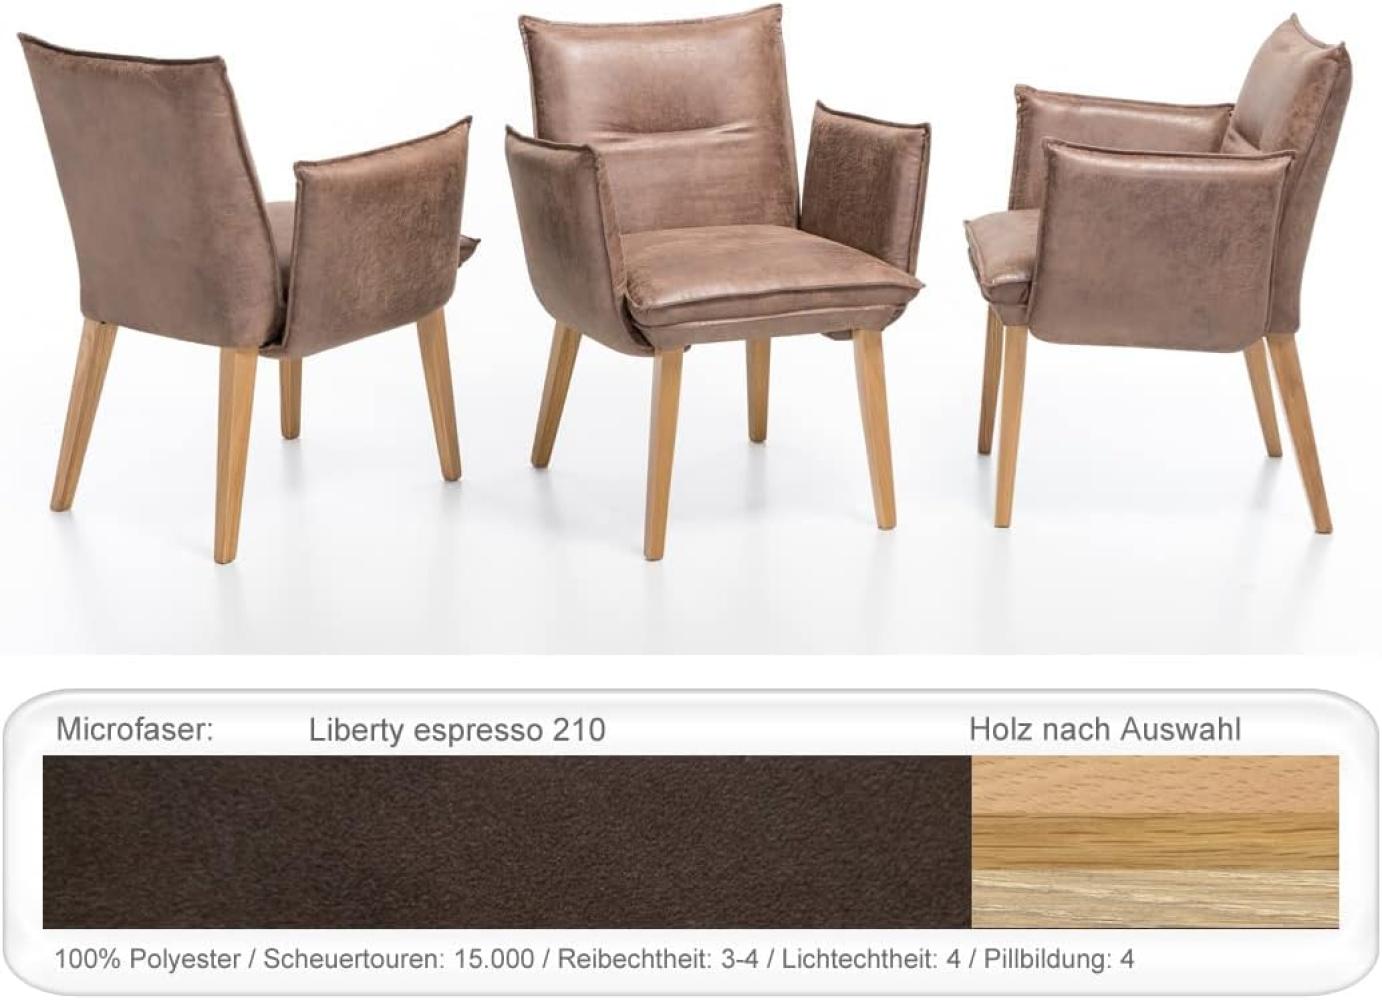 4x Sessel Gerit 2 Rücken mit Naht Polstersessel Esszimmer Massivholz Eiche natur lackiert, Liberty espresso Bild 1